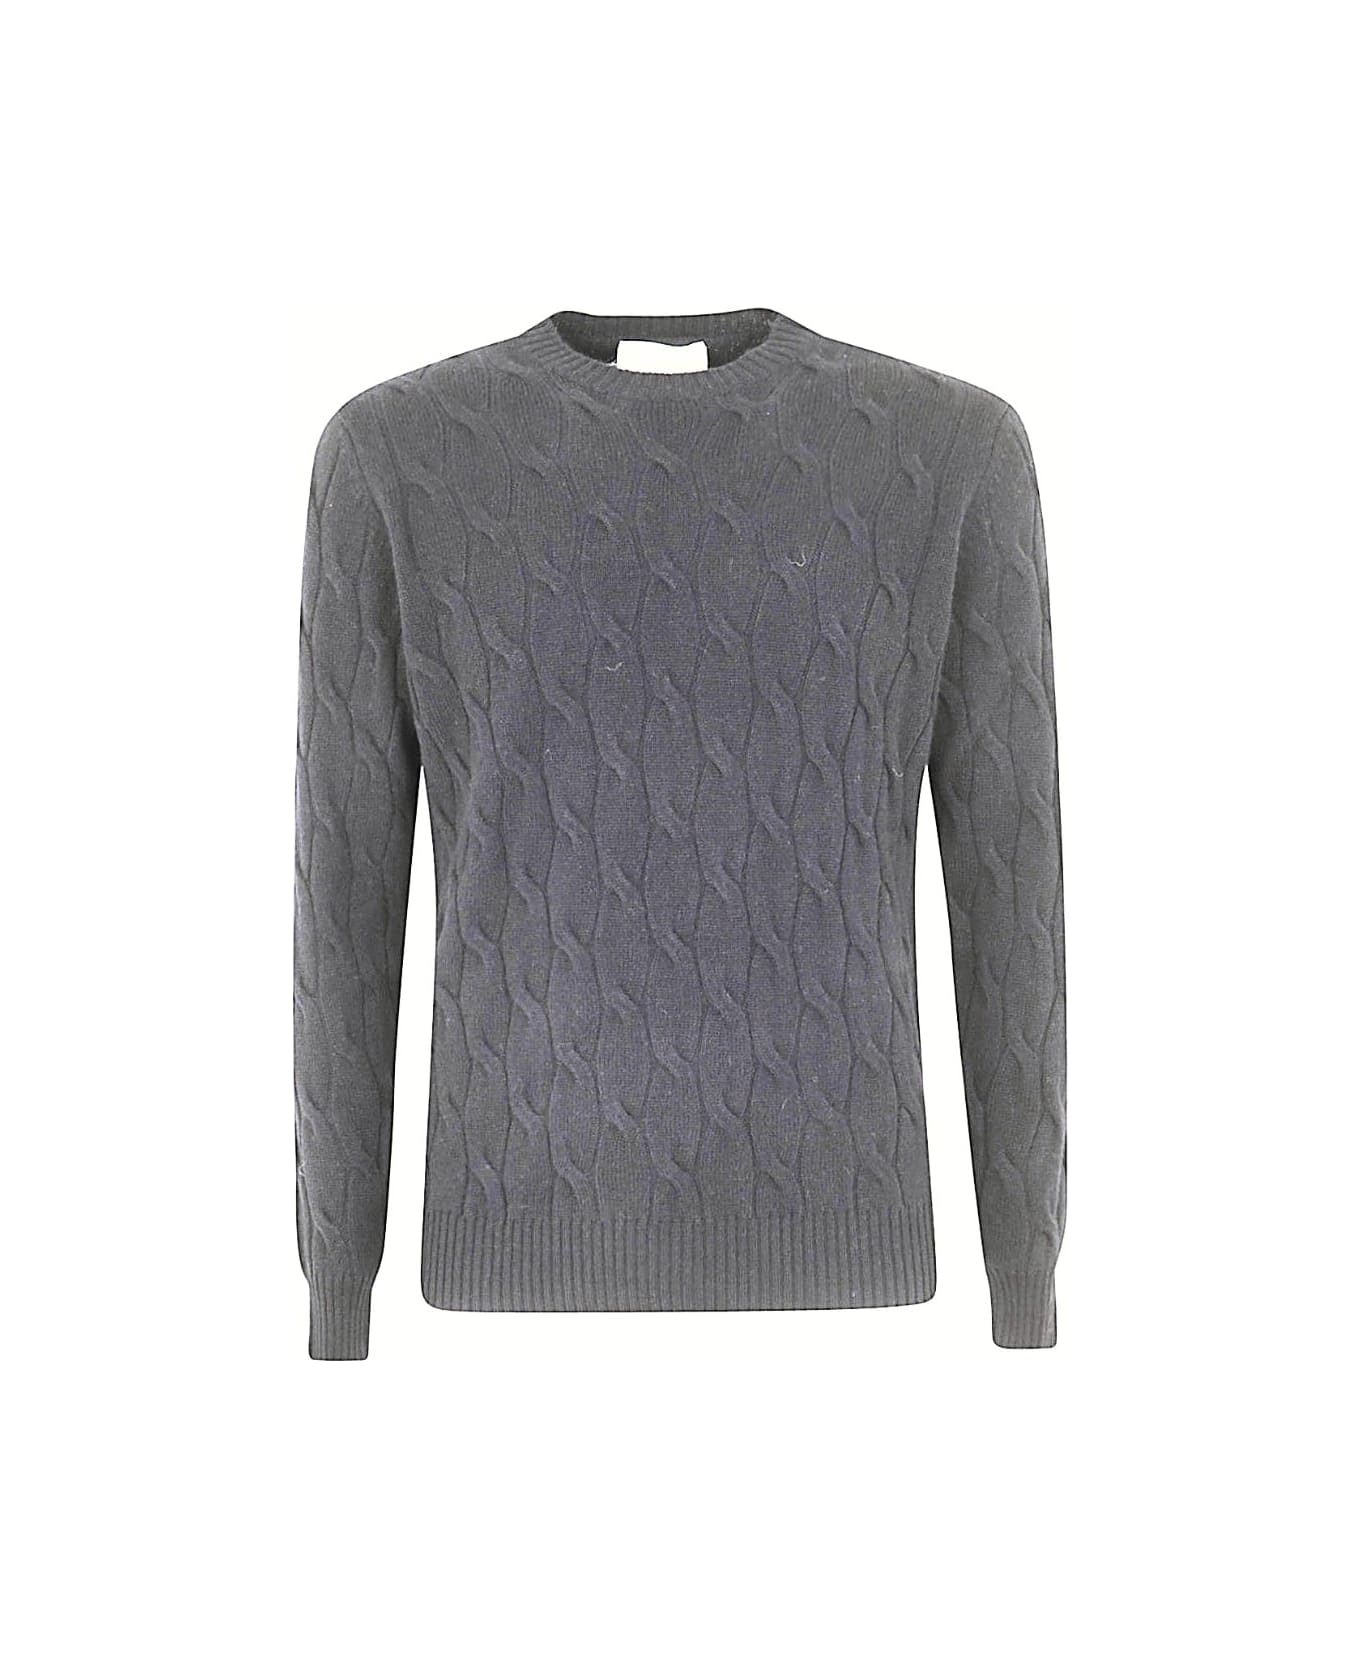 Filippo De Laurentiis Wool Cashmere Long Sleeves Crew Neck Sweater With Braid - Grey